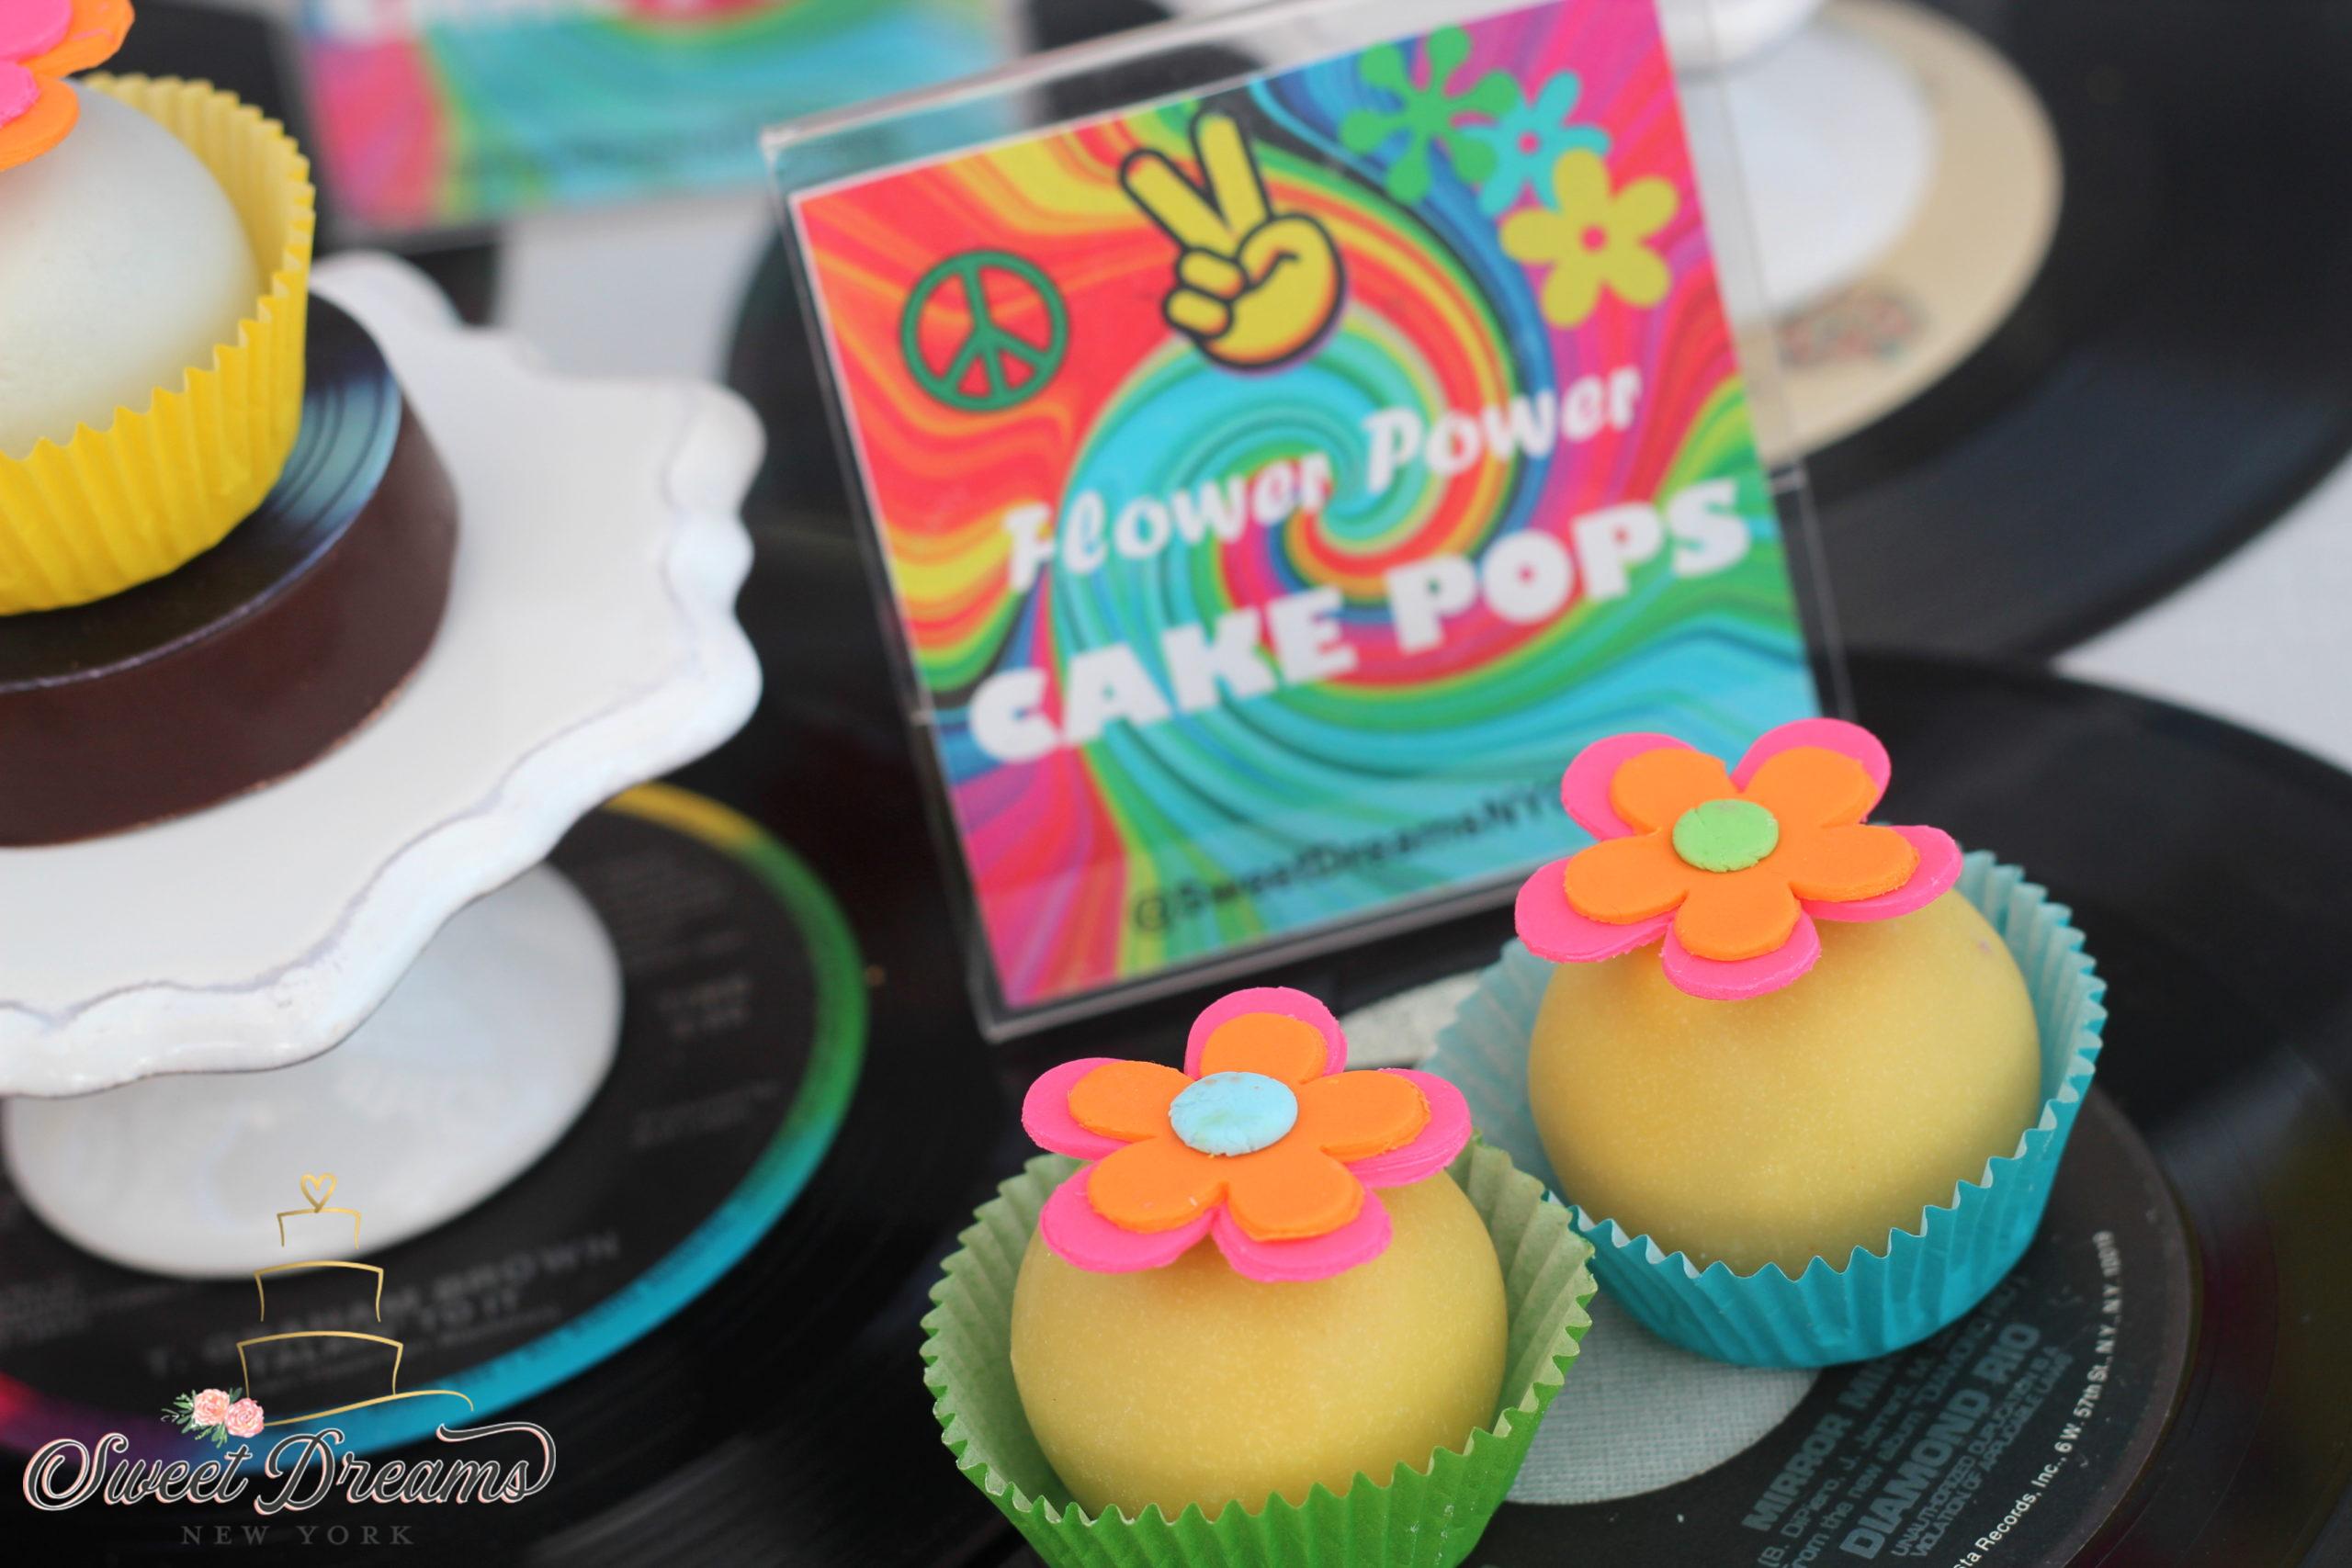 Flower power cake pops hippie rainbow tie dye cake pops and dessert table Long Island NY